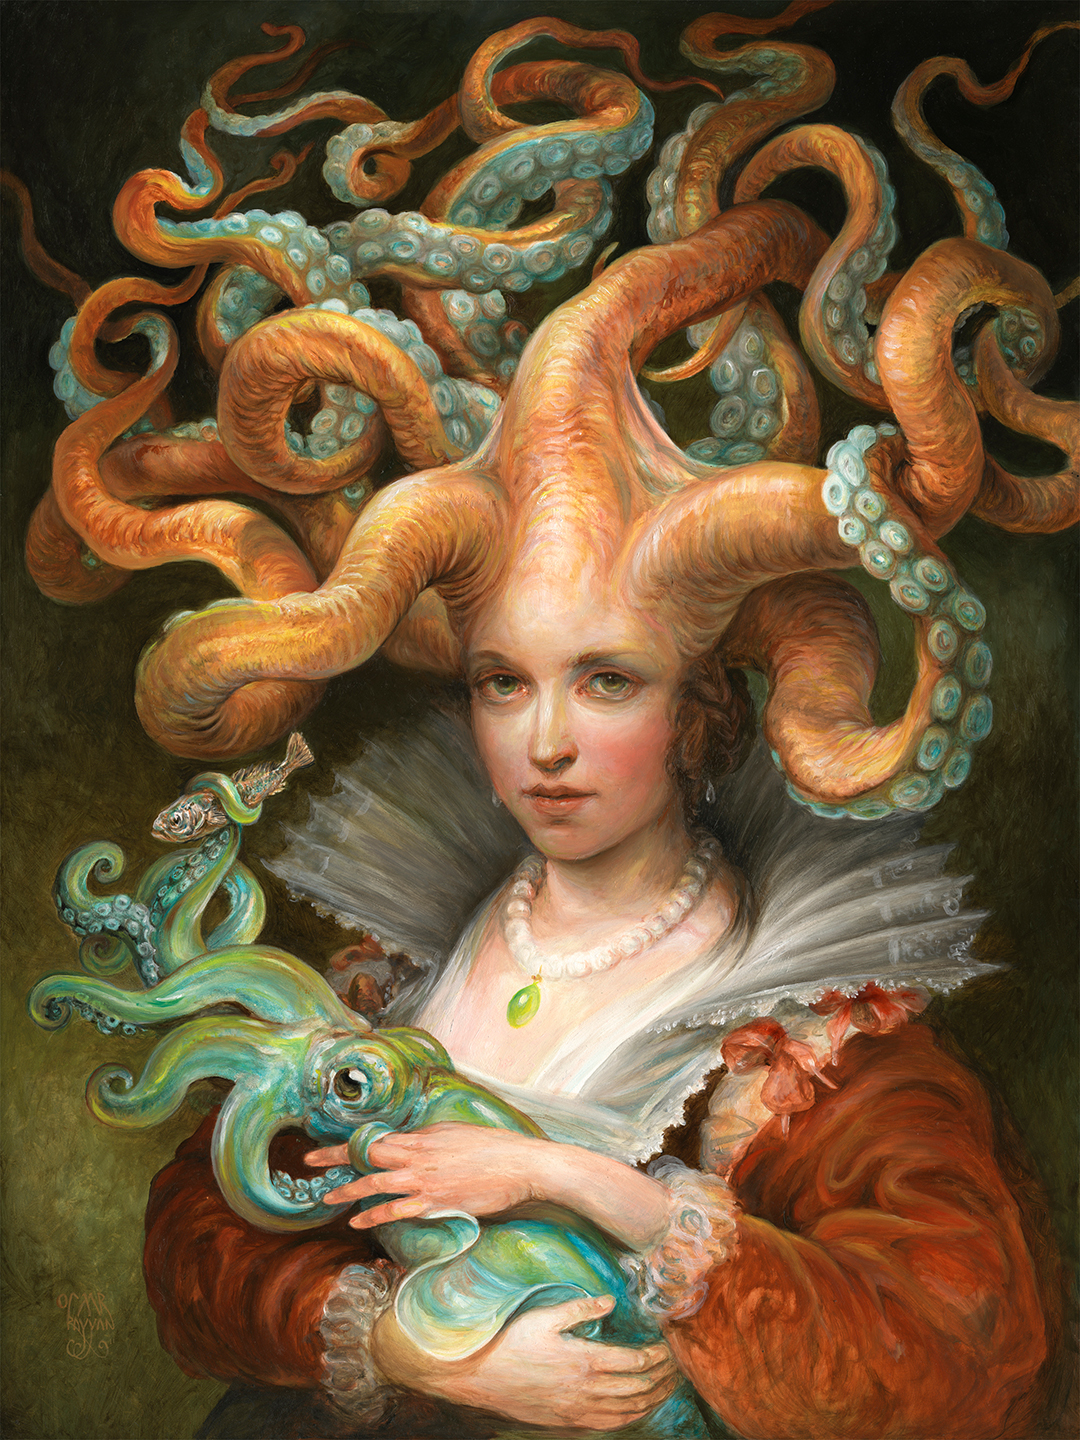 "Contessa with Squid" by Omar Rayyan